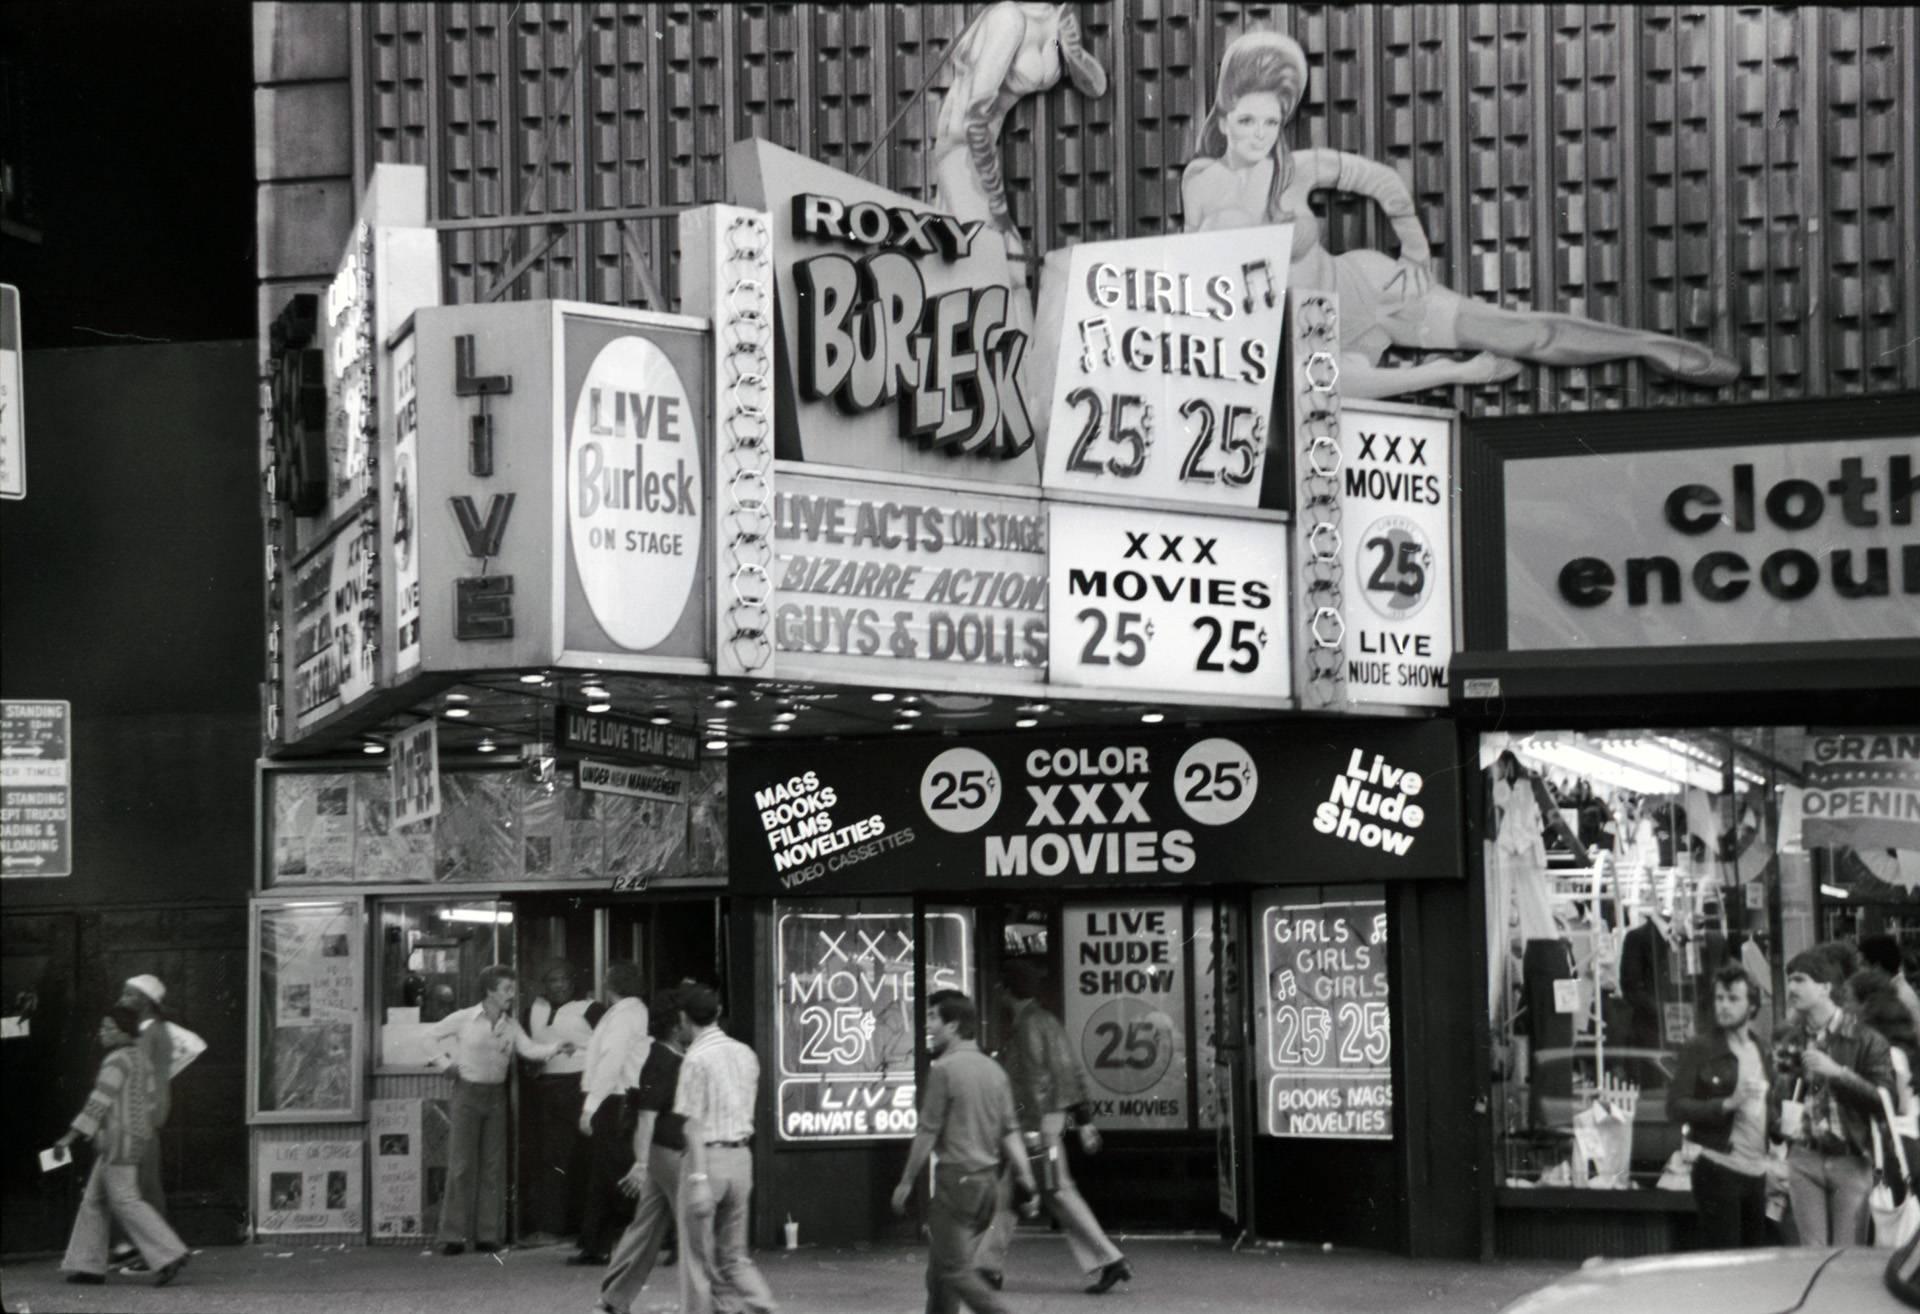 Fernando Natalici Black and White Photograph – New Yorker Times Square, Fotografie der 1970er Jahre  Straßenfotografie in New York City) 